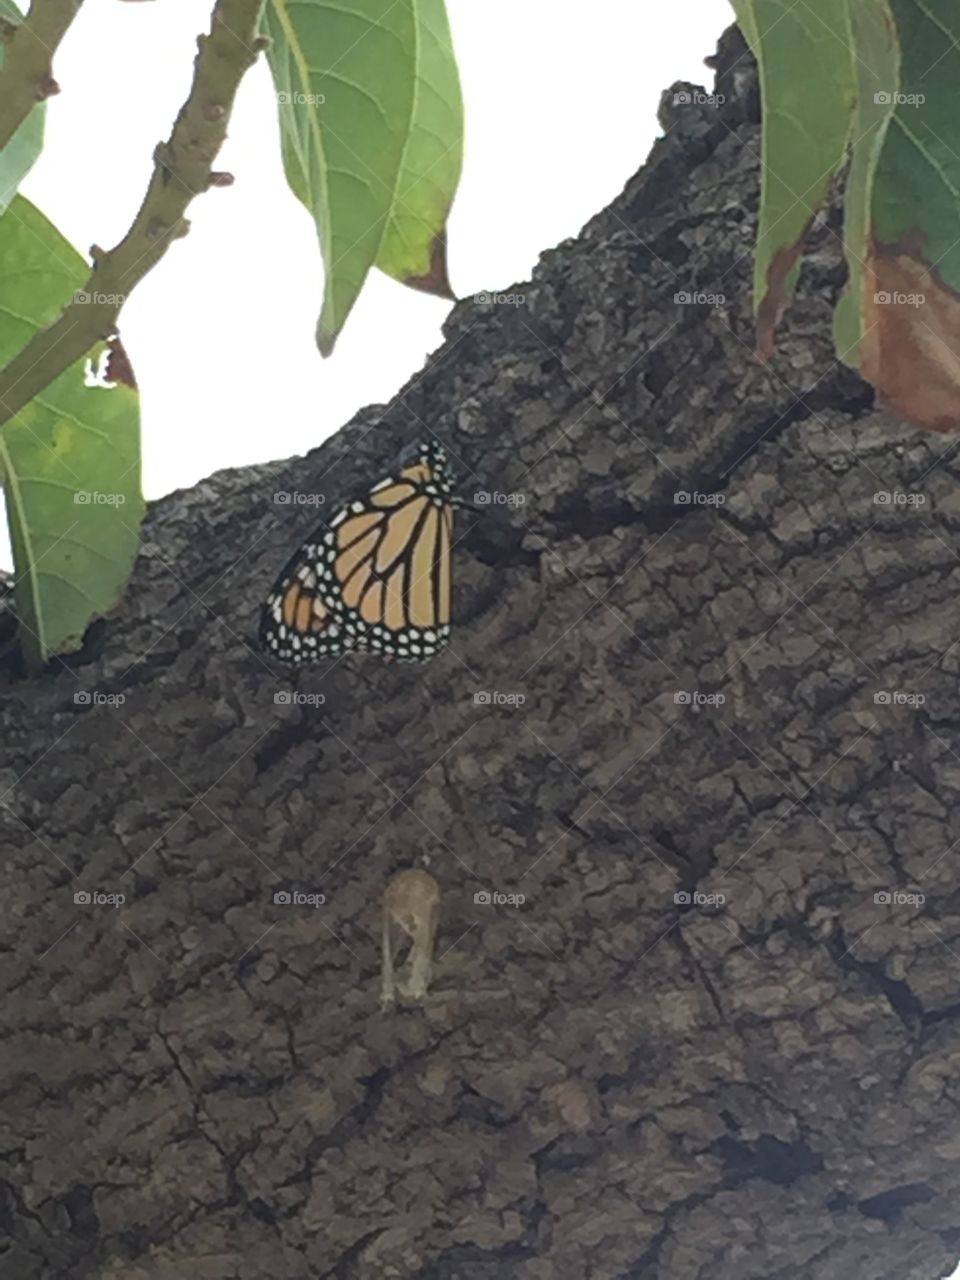 New monarch butterfly 